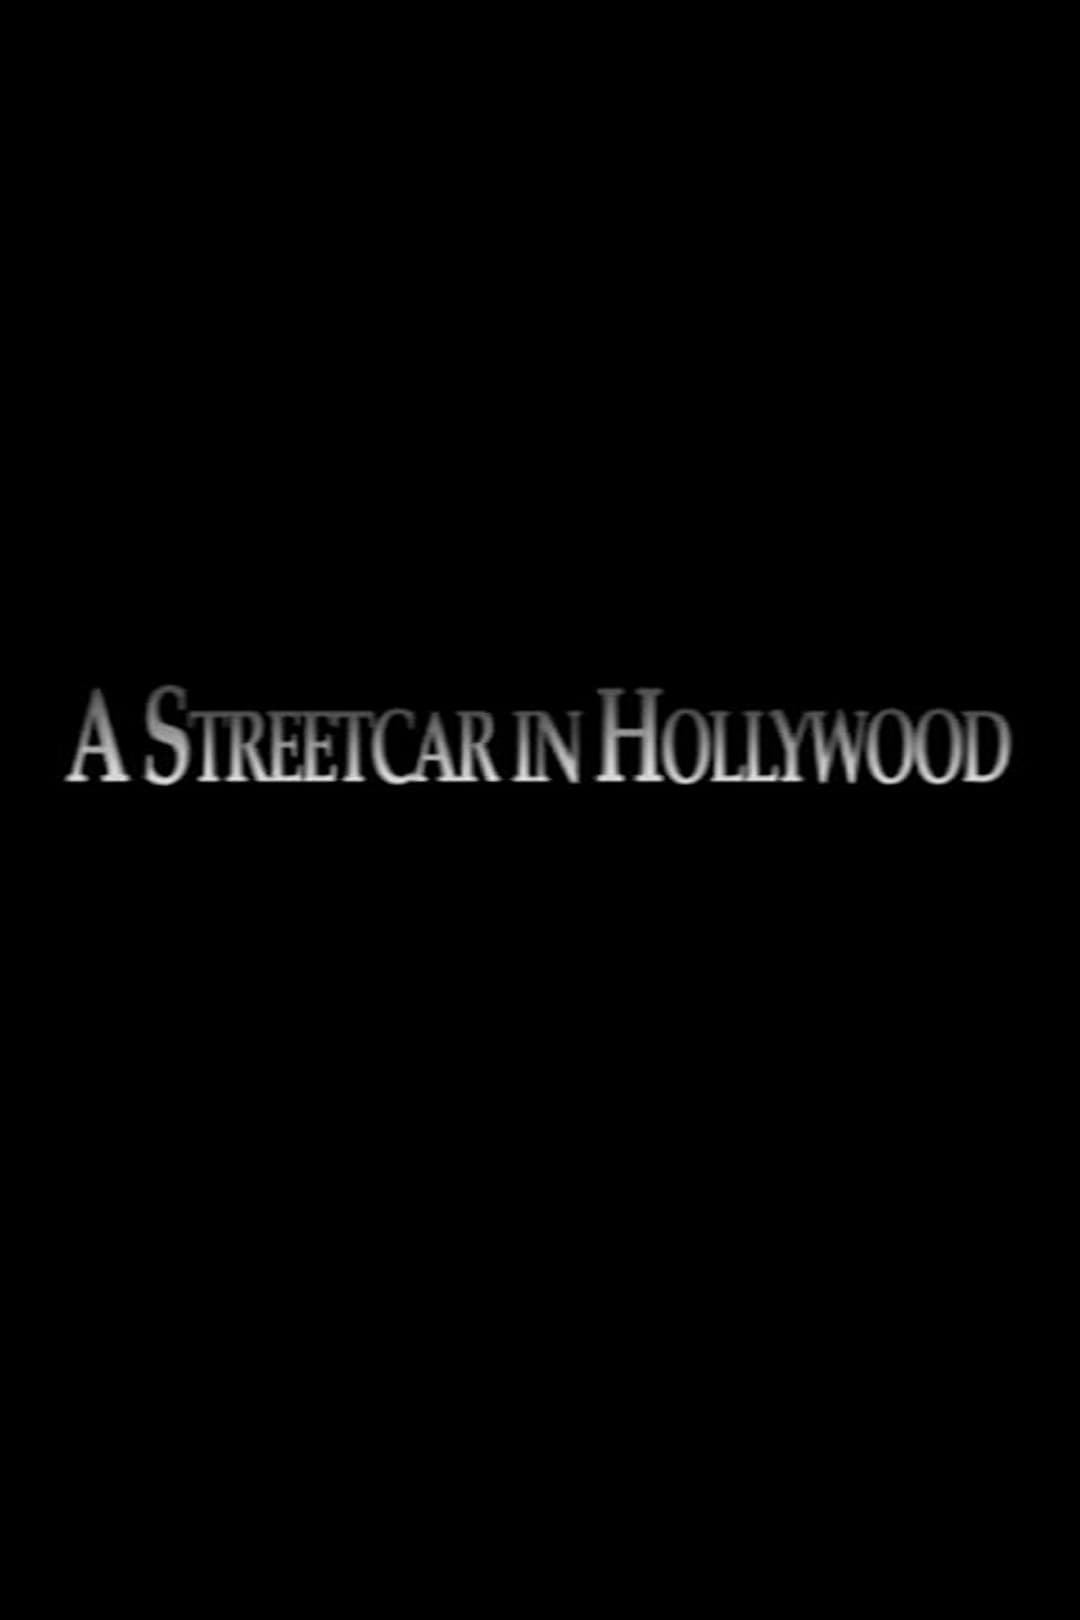 A Streetcar in Hollywood